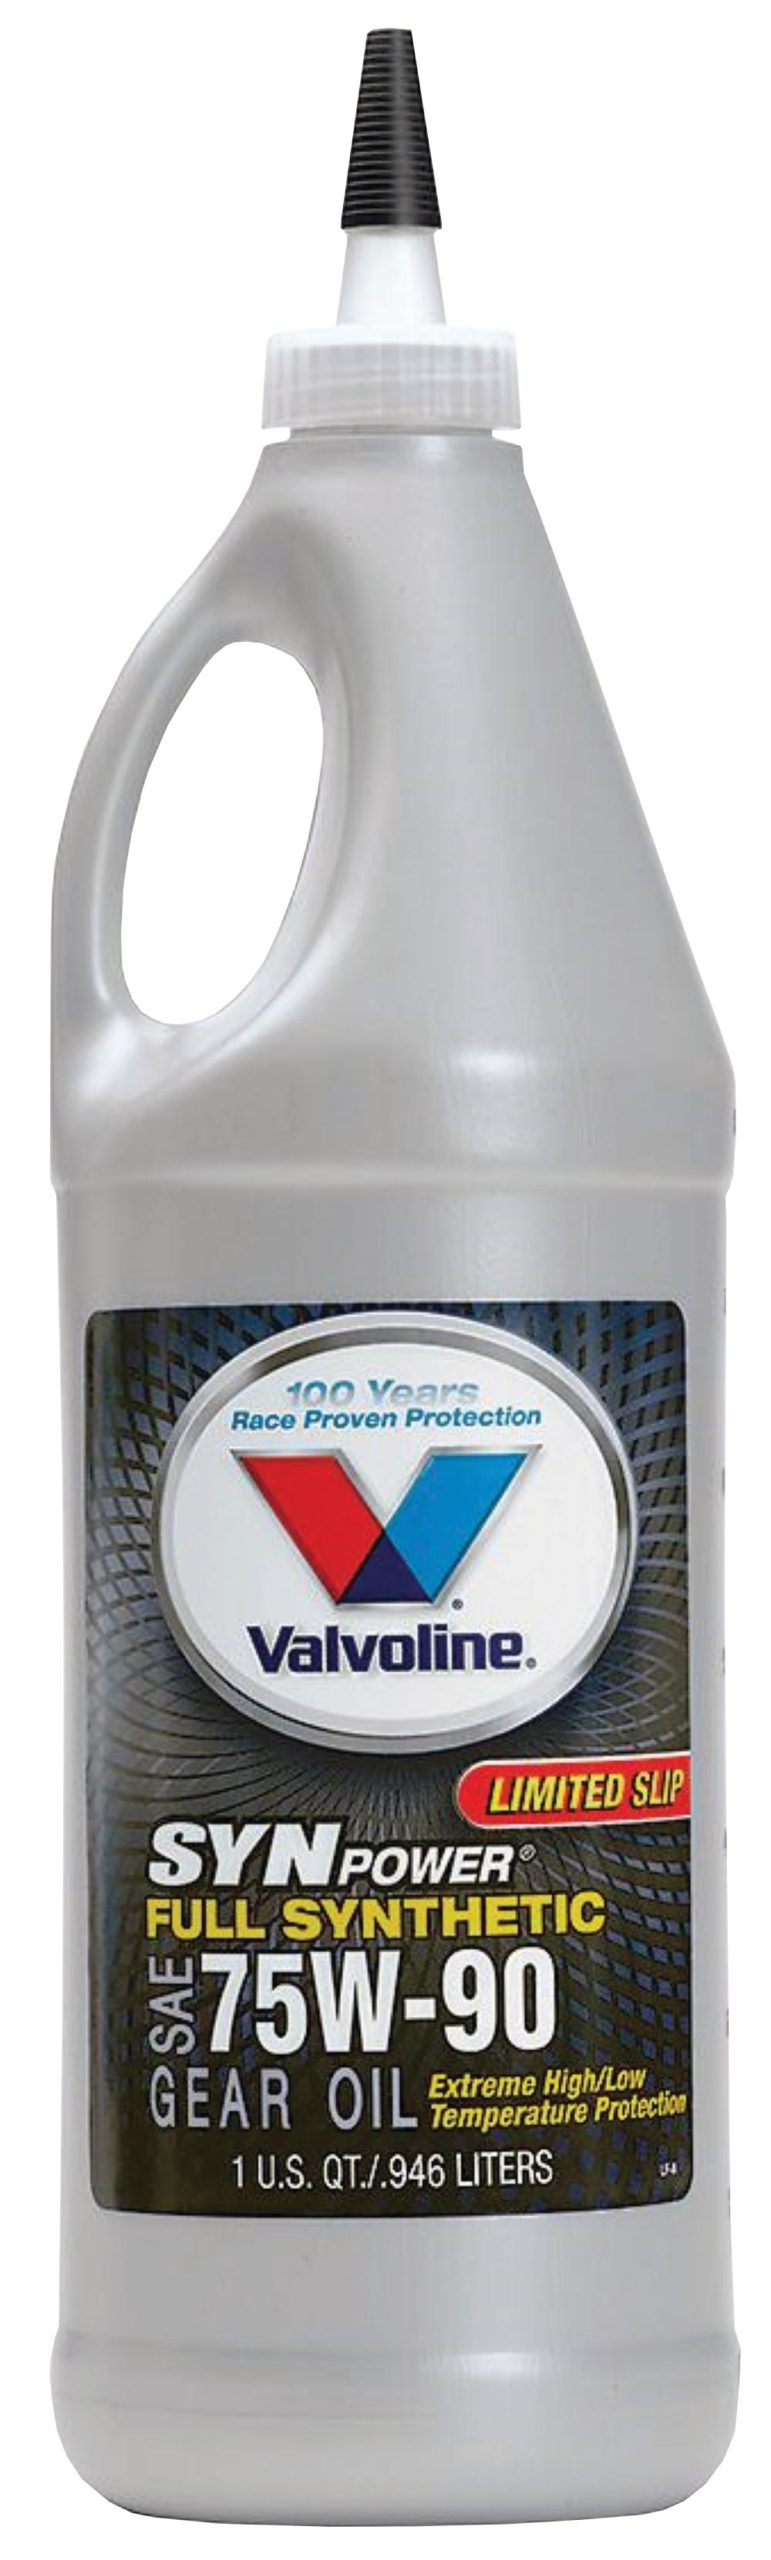 Valvoline's SynPower Full Synthetic Gear Oil